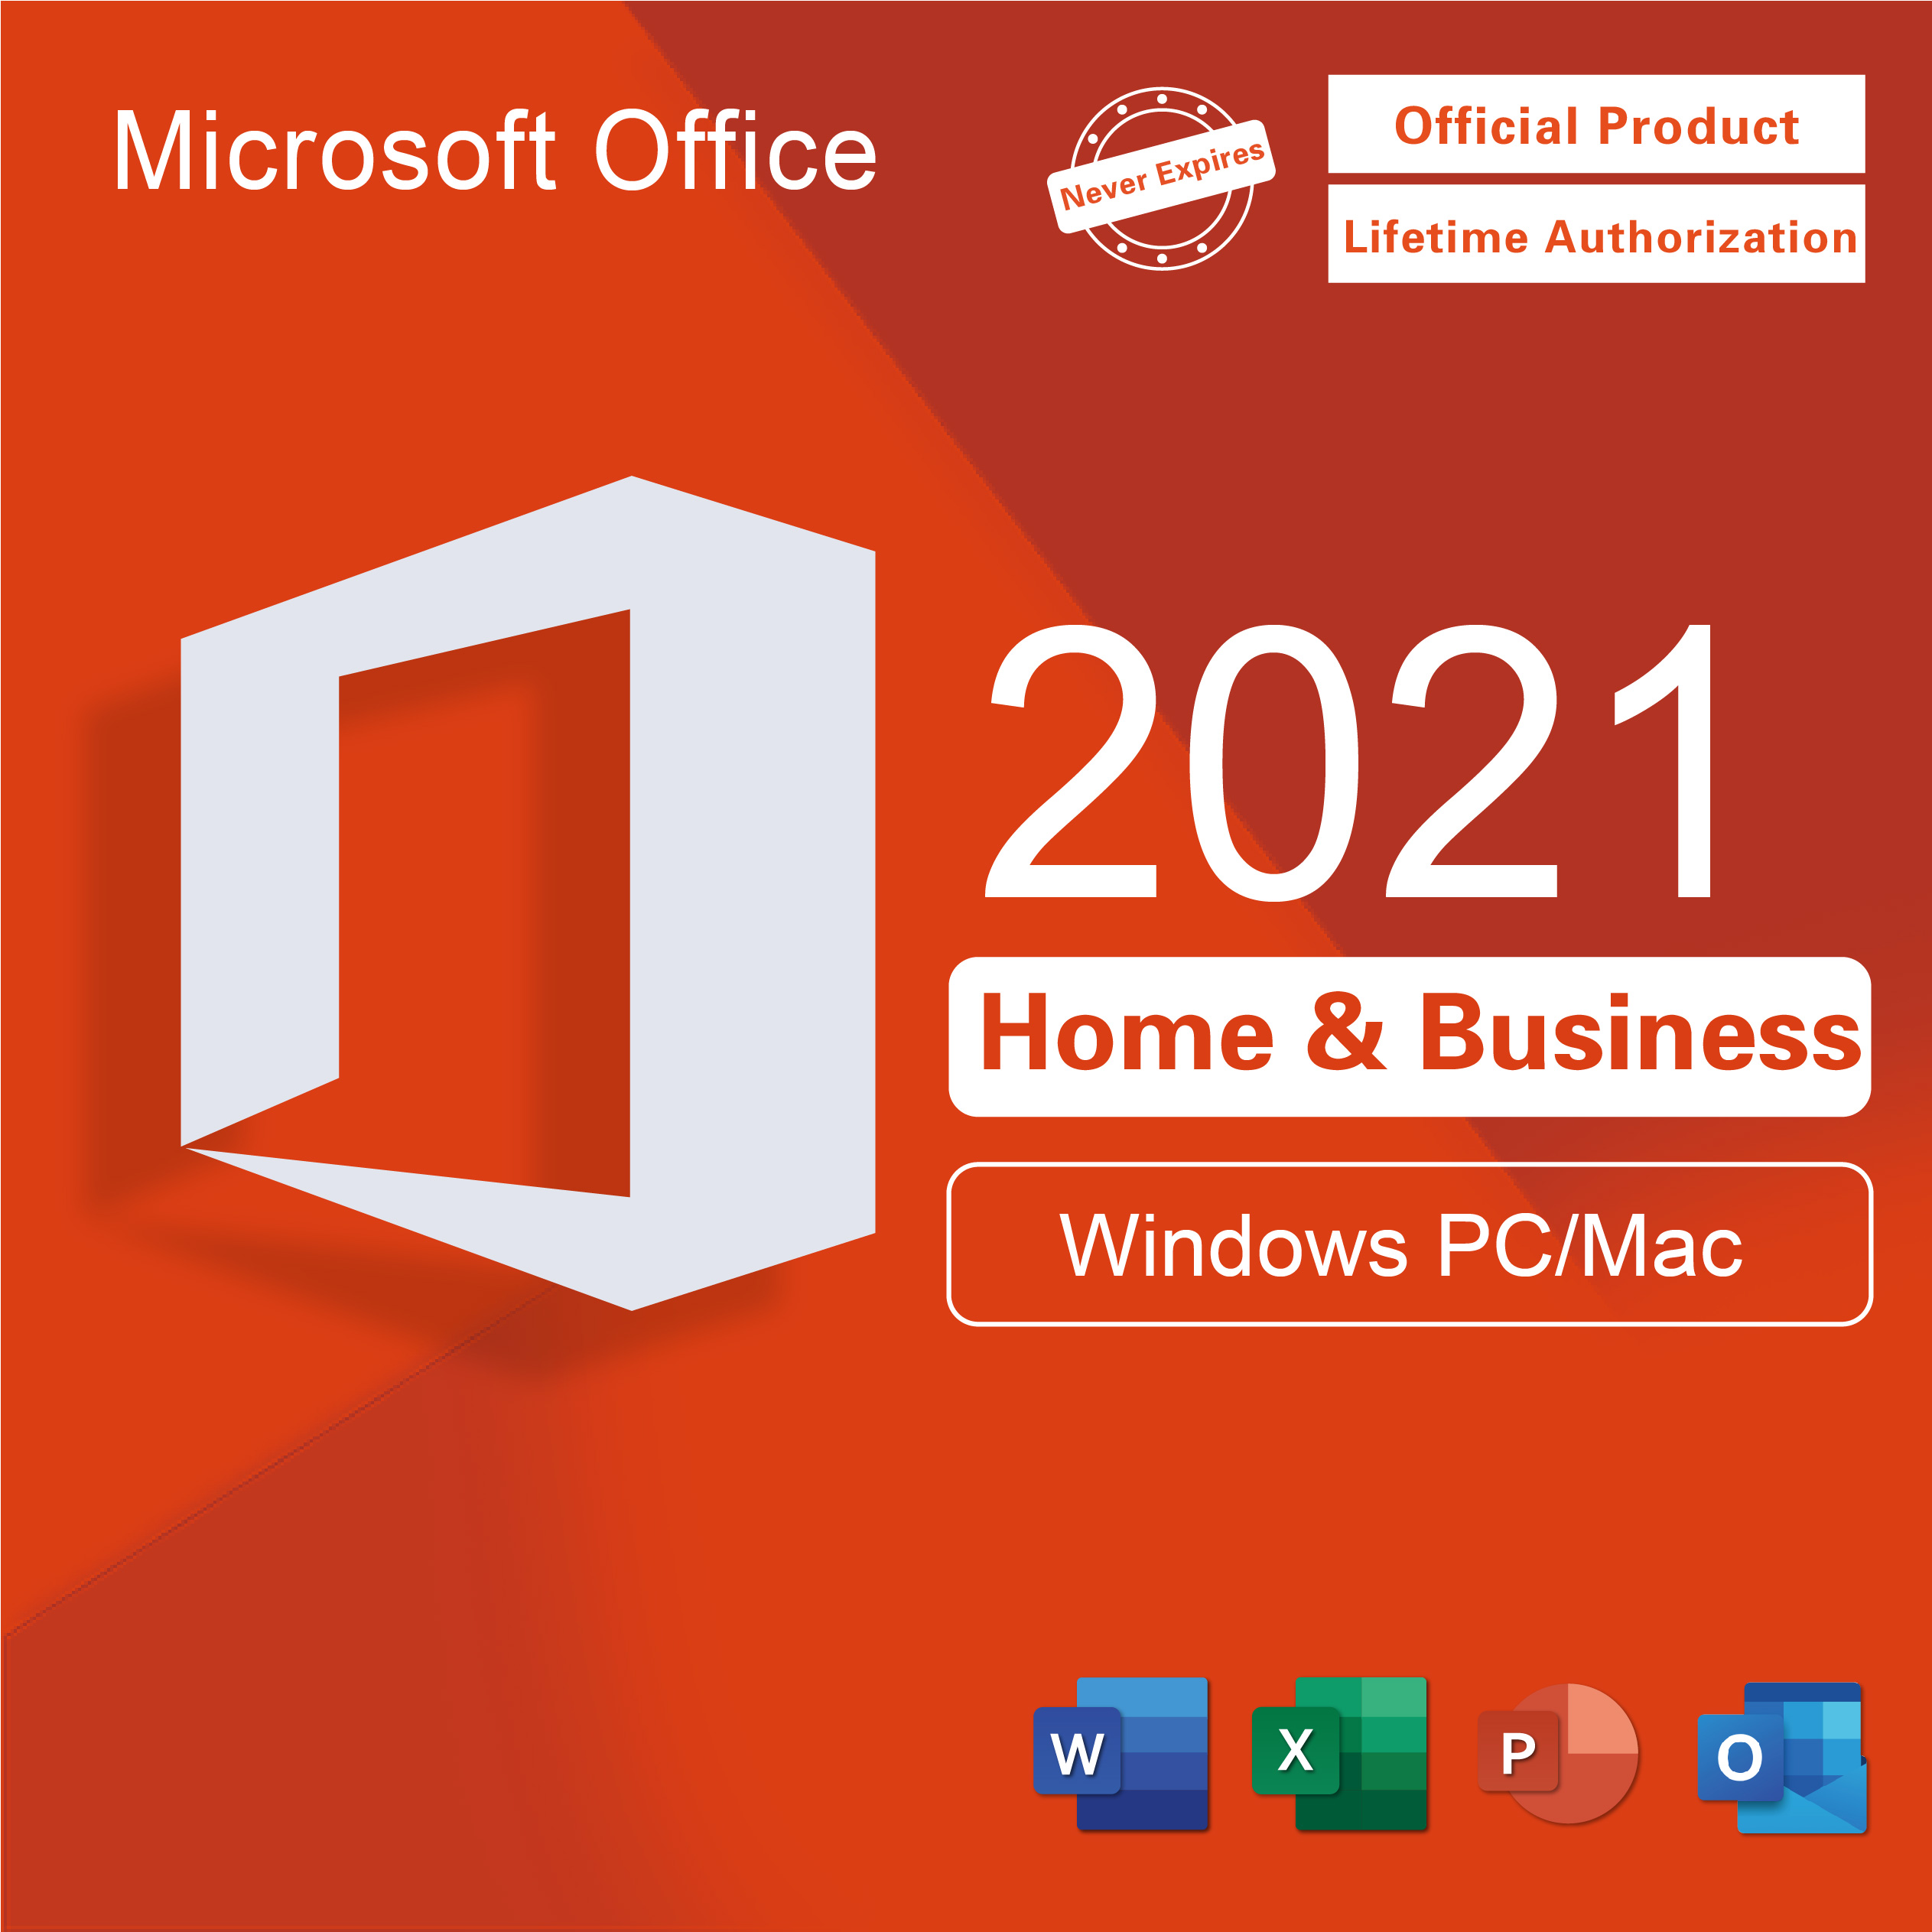 Microsoft Office 2021 Home & Business PC/Mac